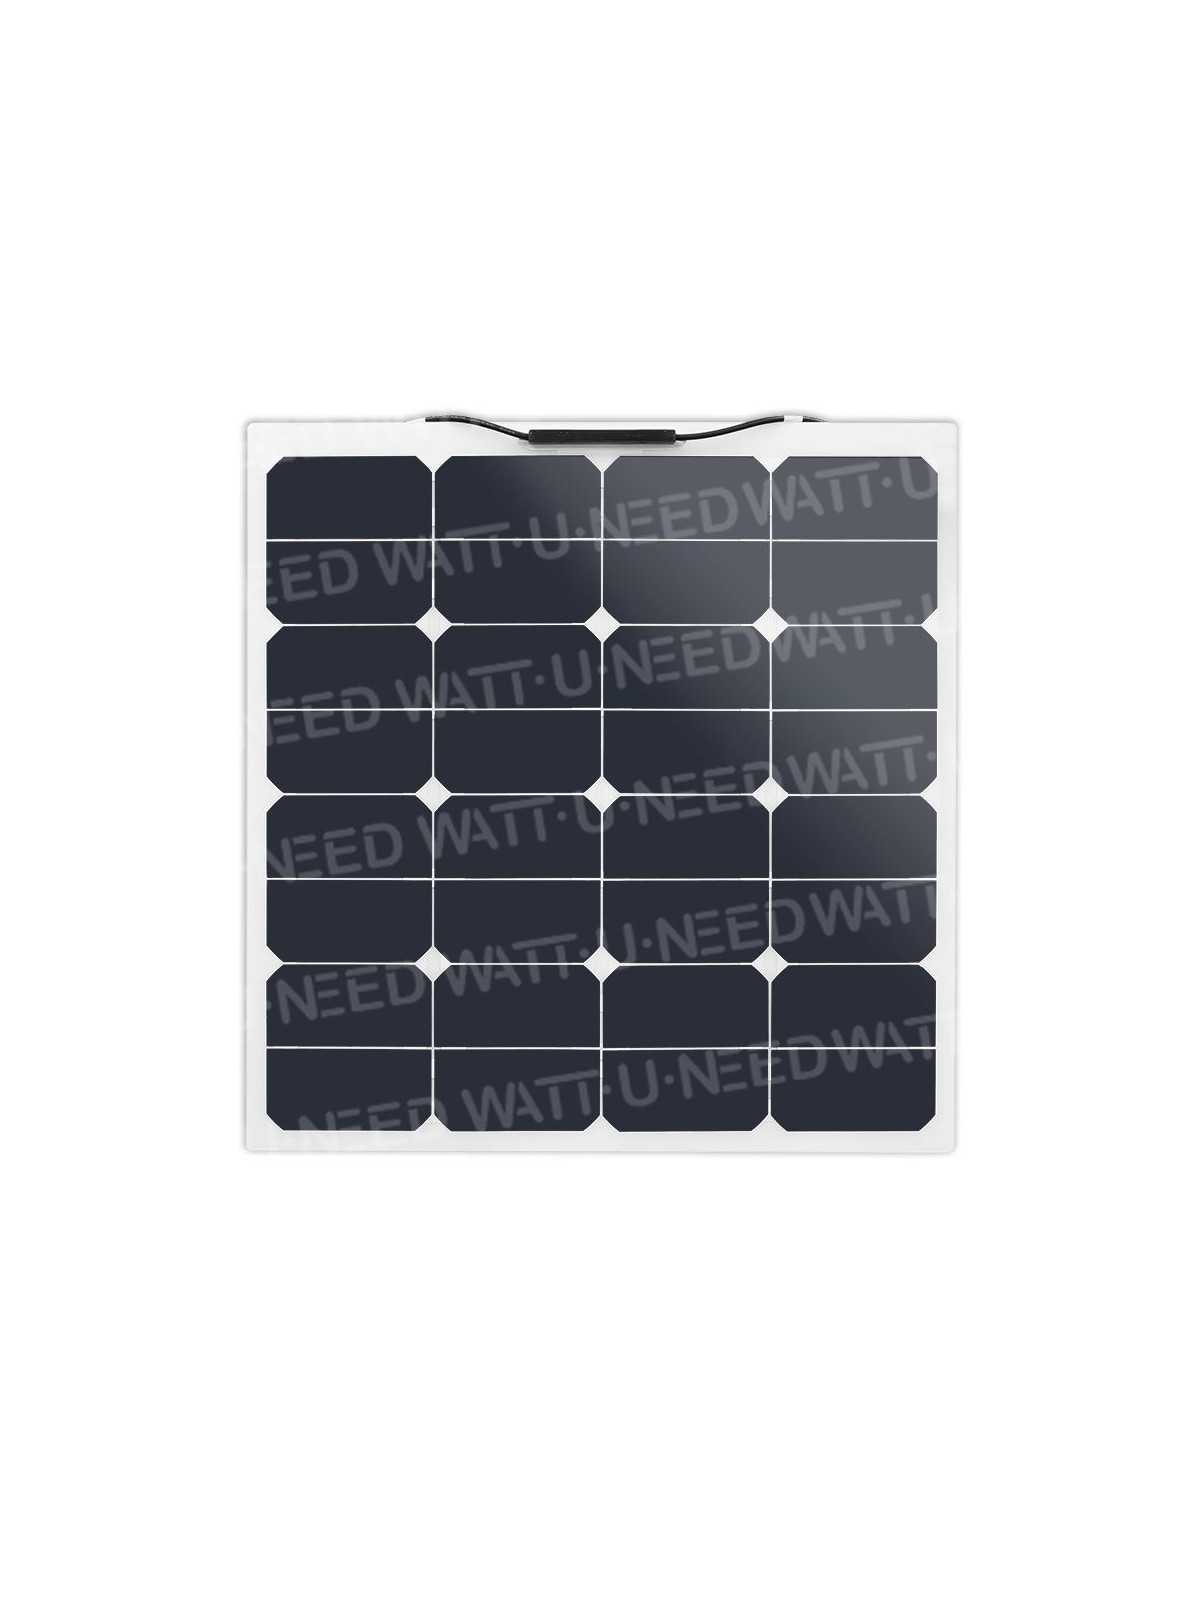 MX FLEX Protect 50Wp 12V panel solar Back Contact